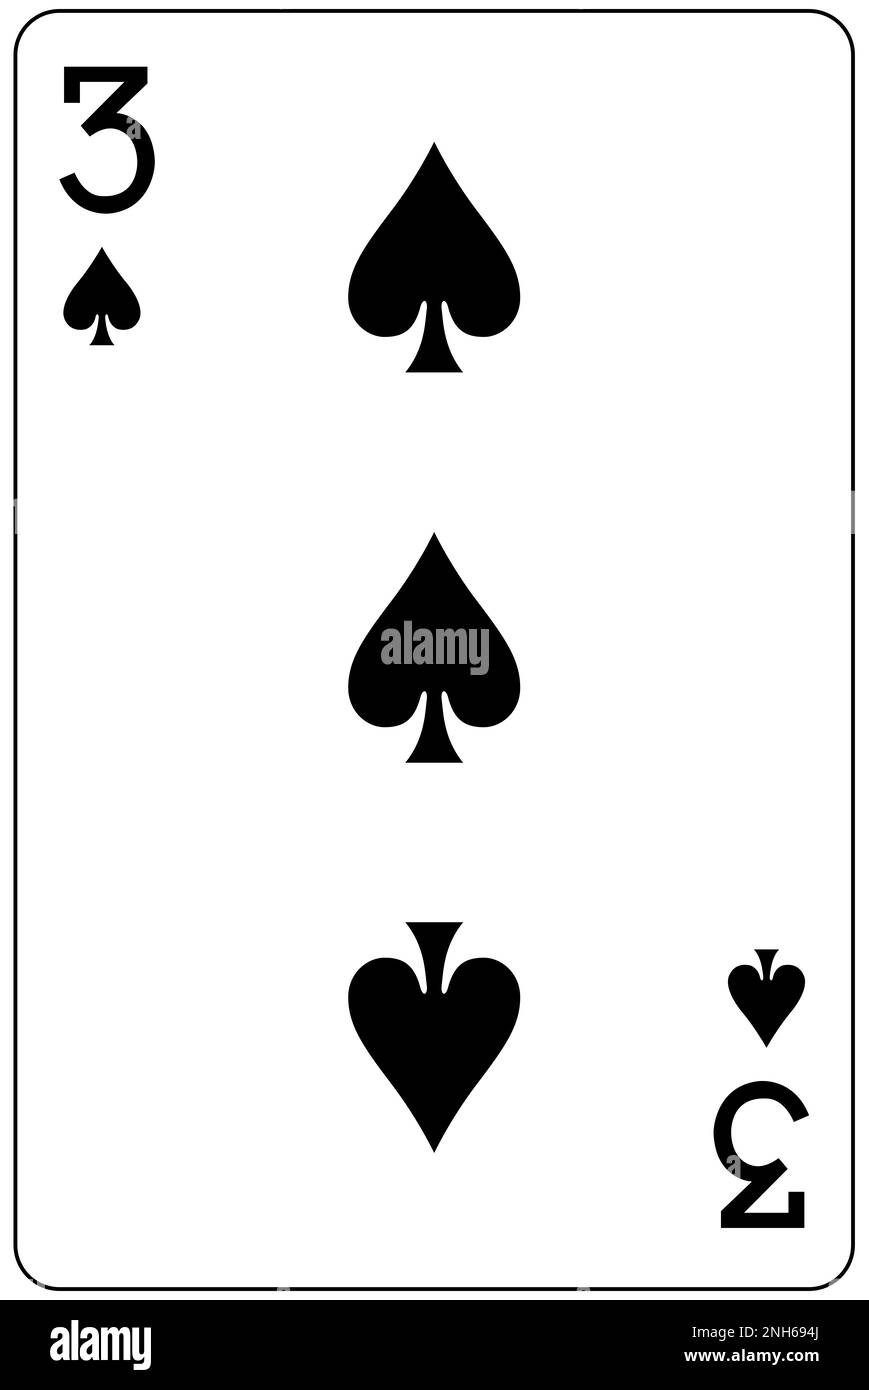 Three Of Spades Playing Card 2NH694J 